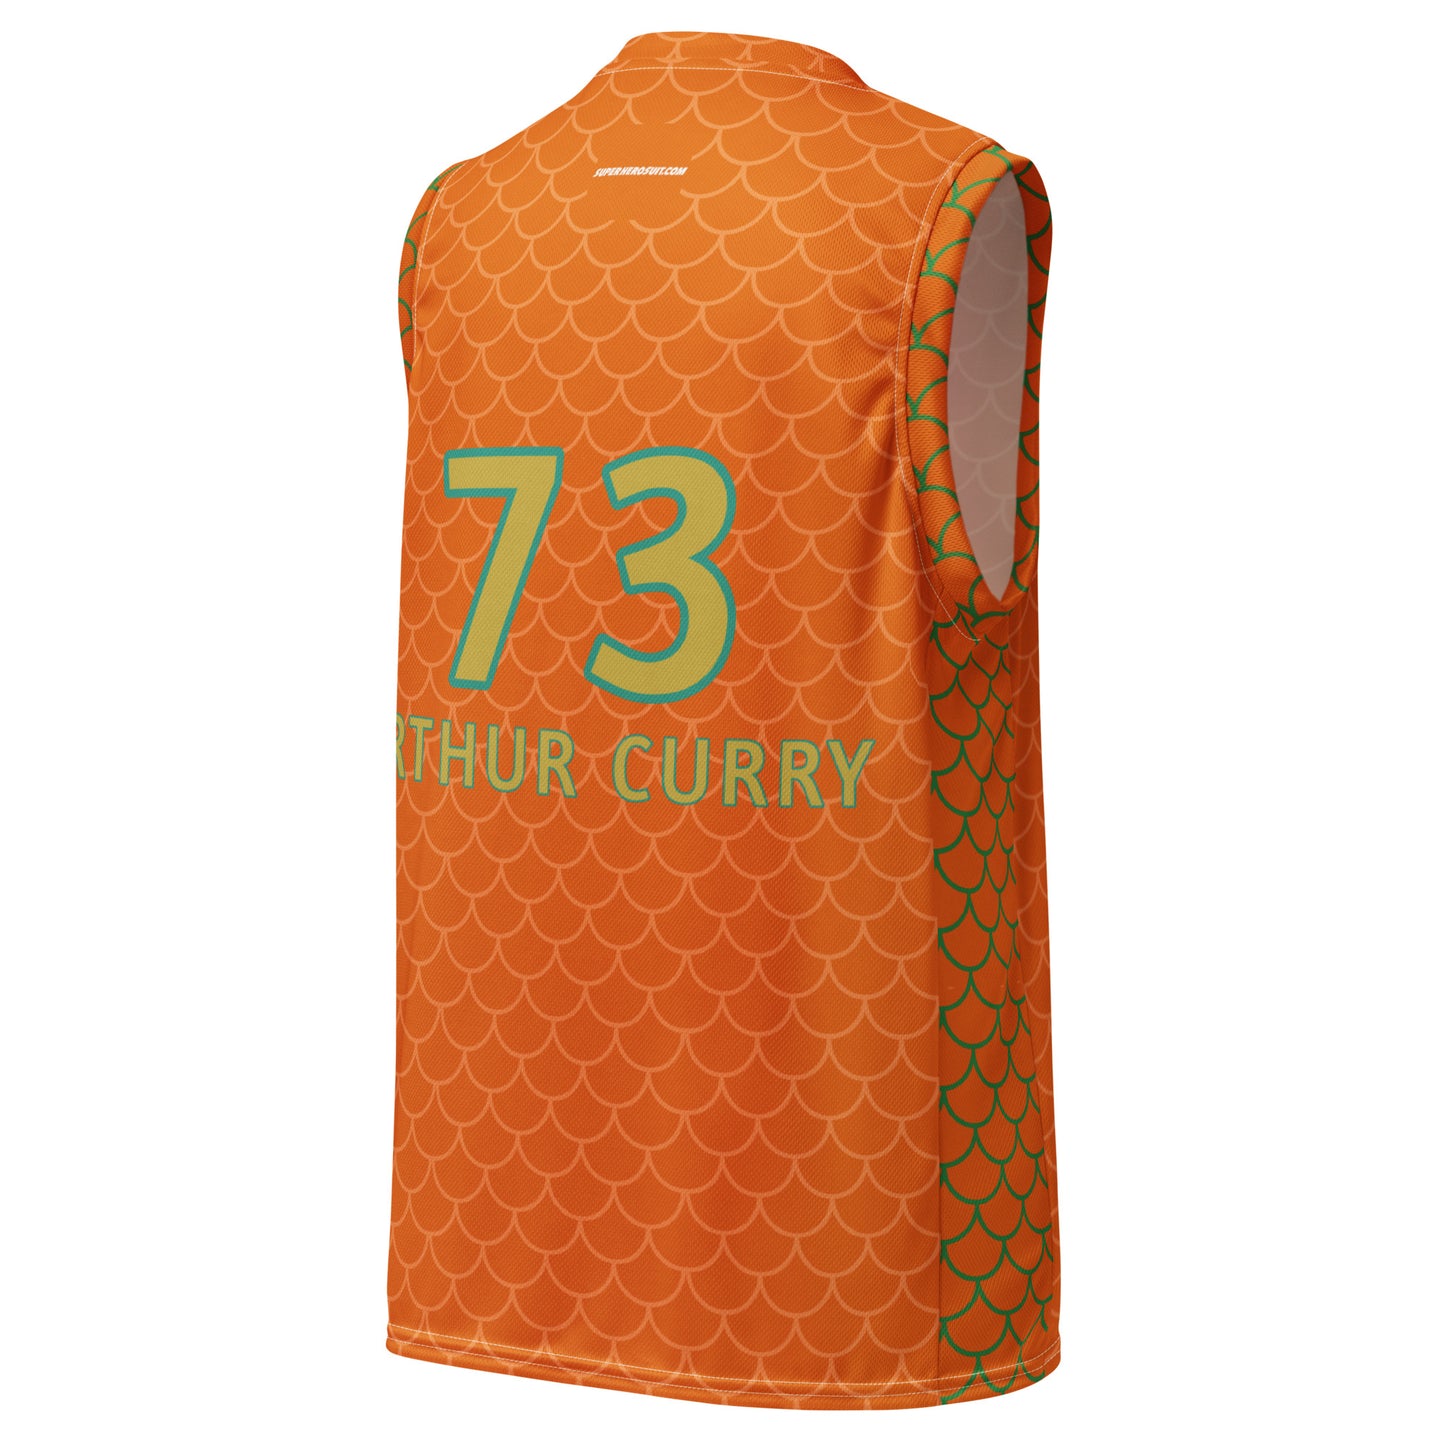 Arthur Curry Basketball Jersey